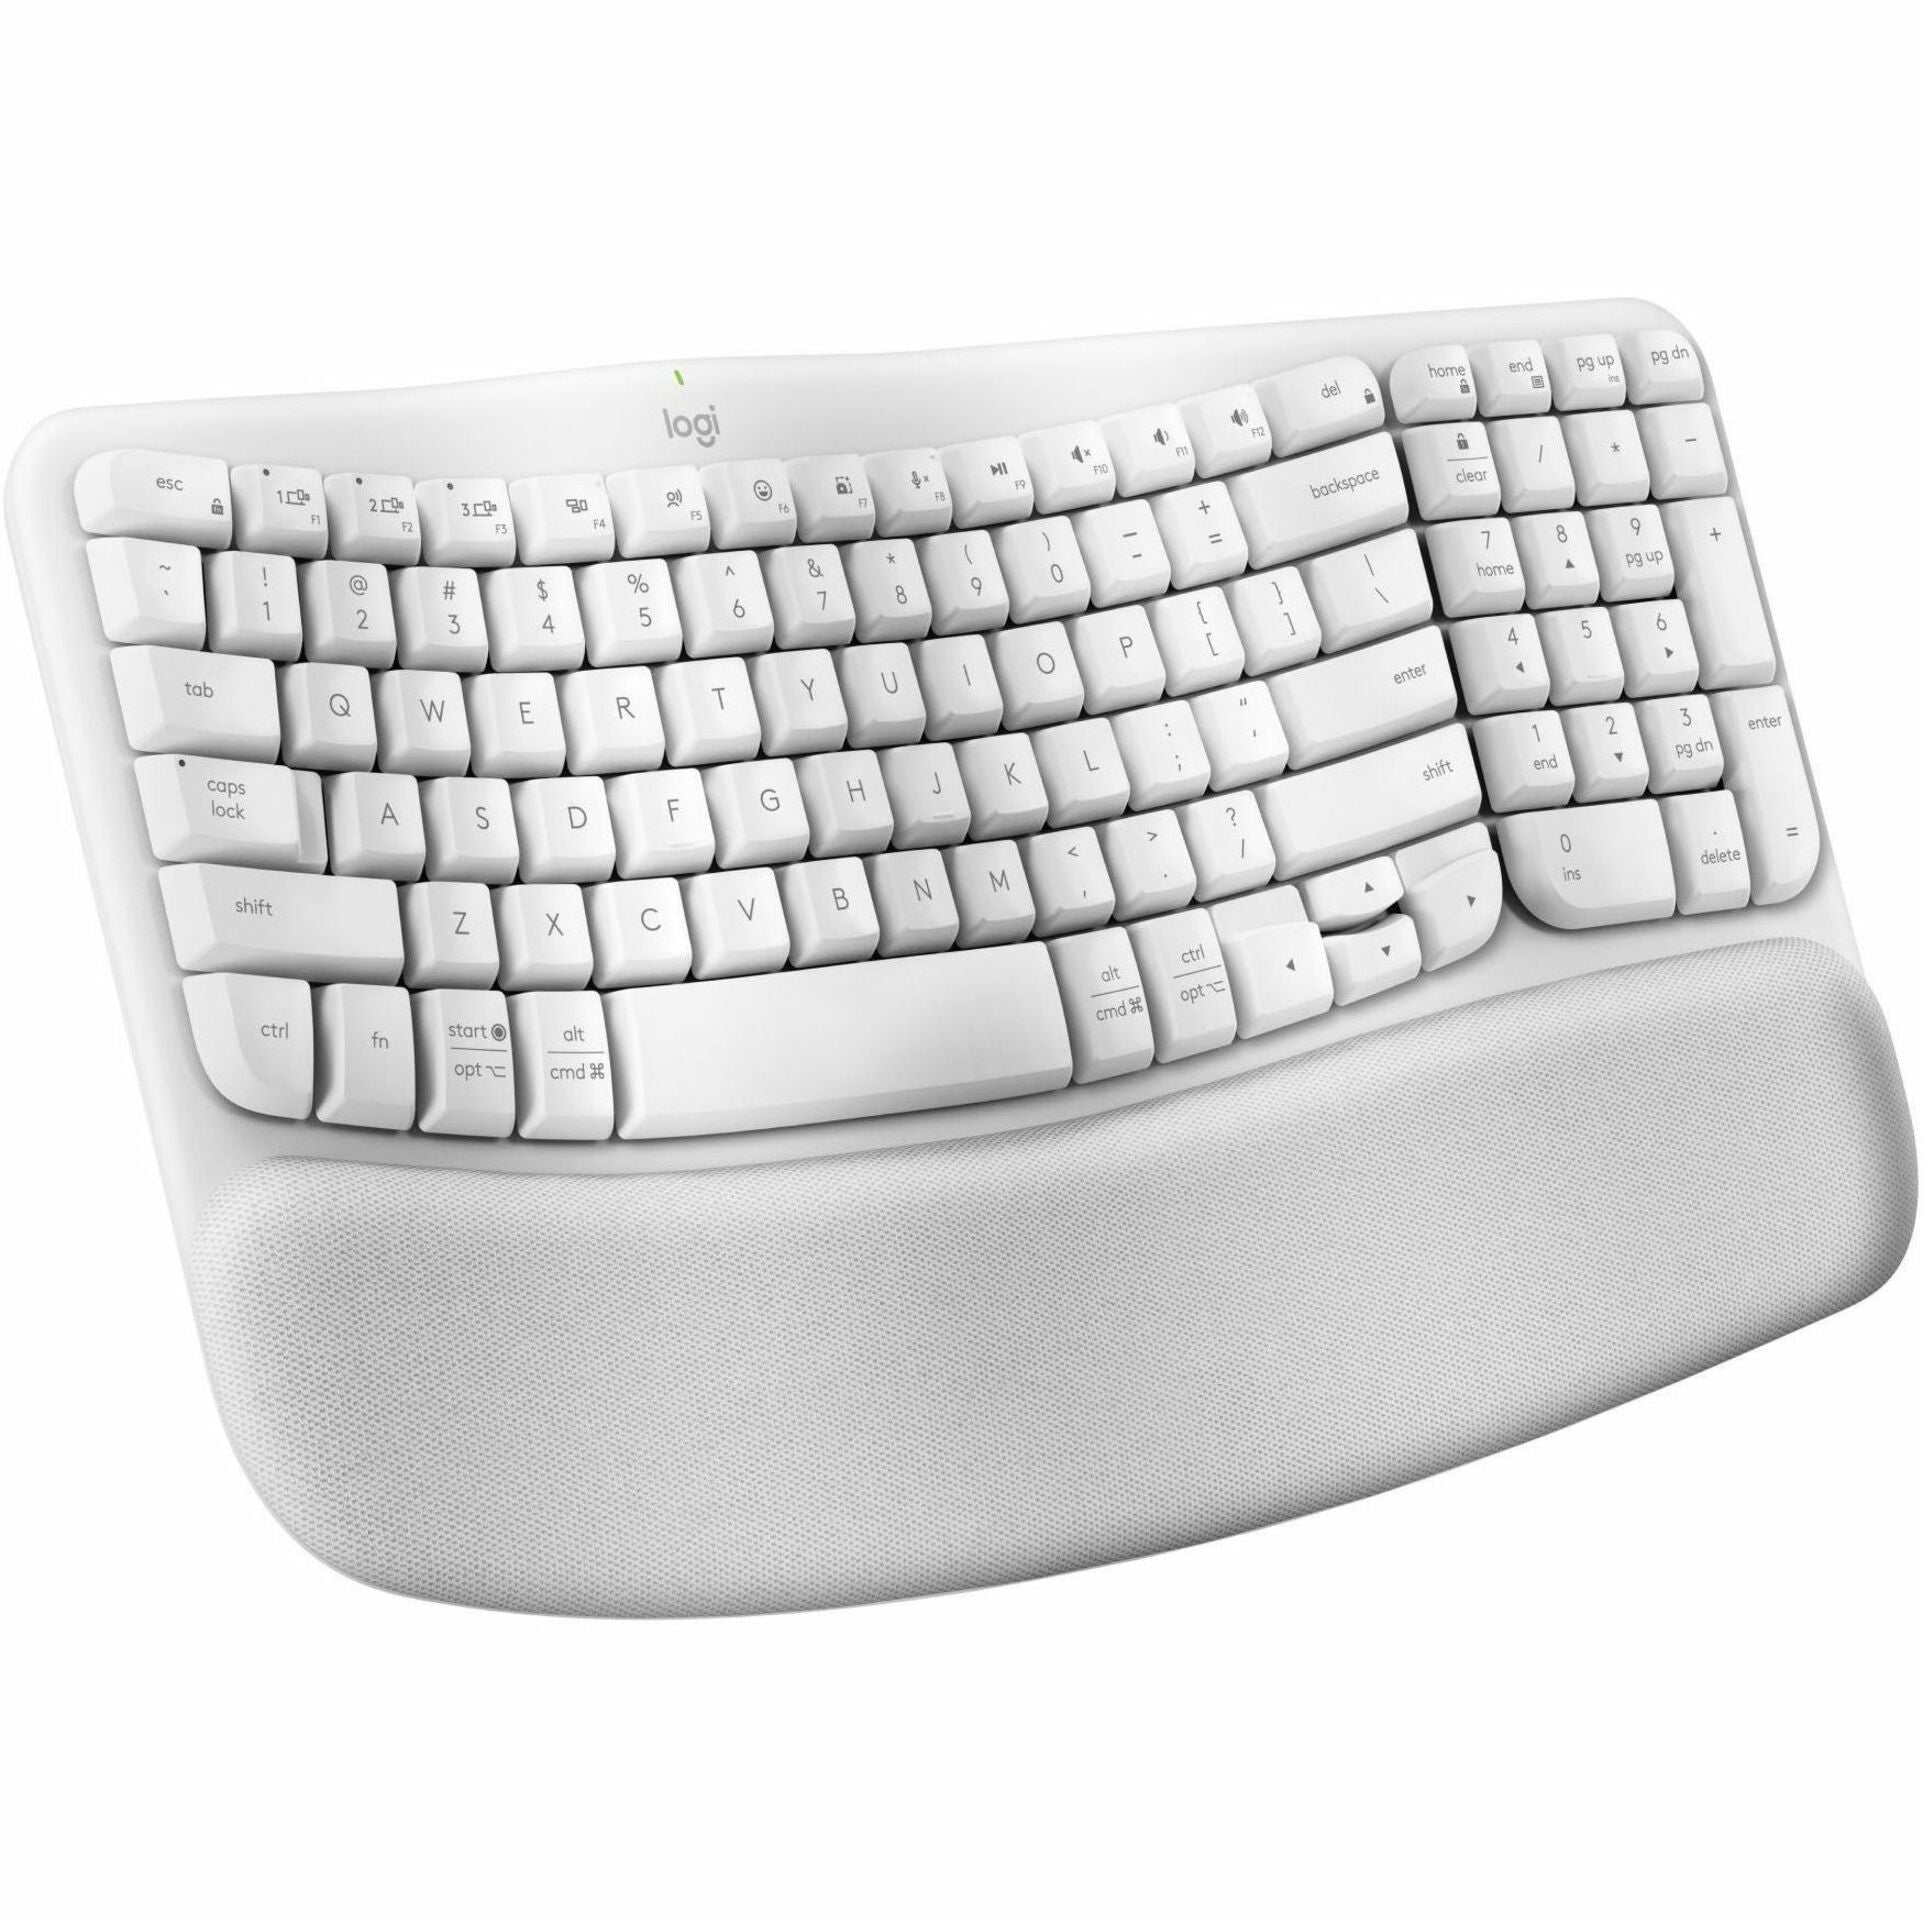 Logitech 920-012275 Wave Keys Keyboard, Ergonomic Wireless Bluetooth Keyboard with Adjustable Tilt, Palm Rest, and Compact Design